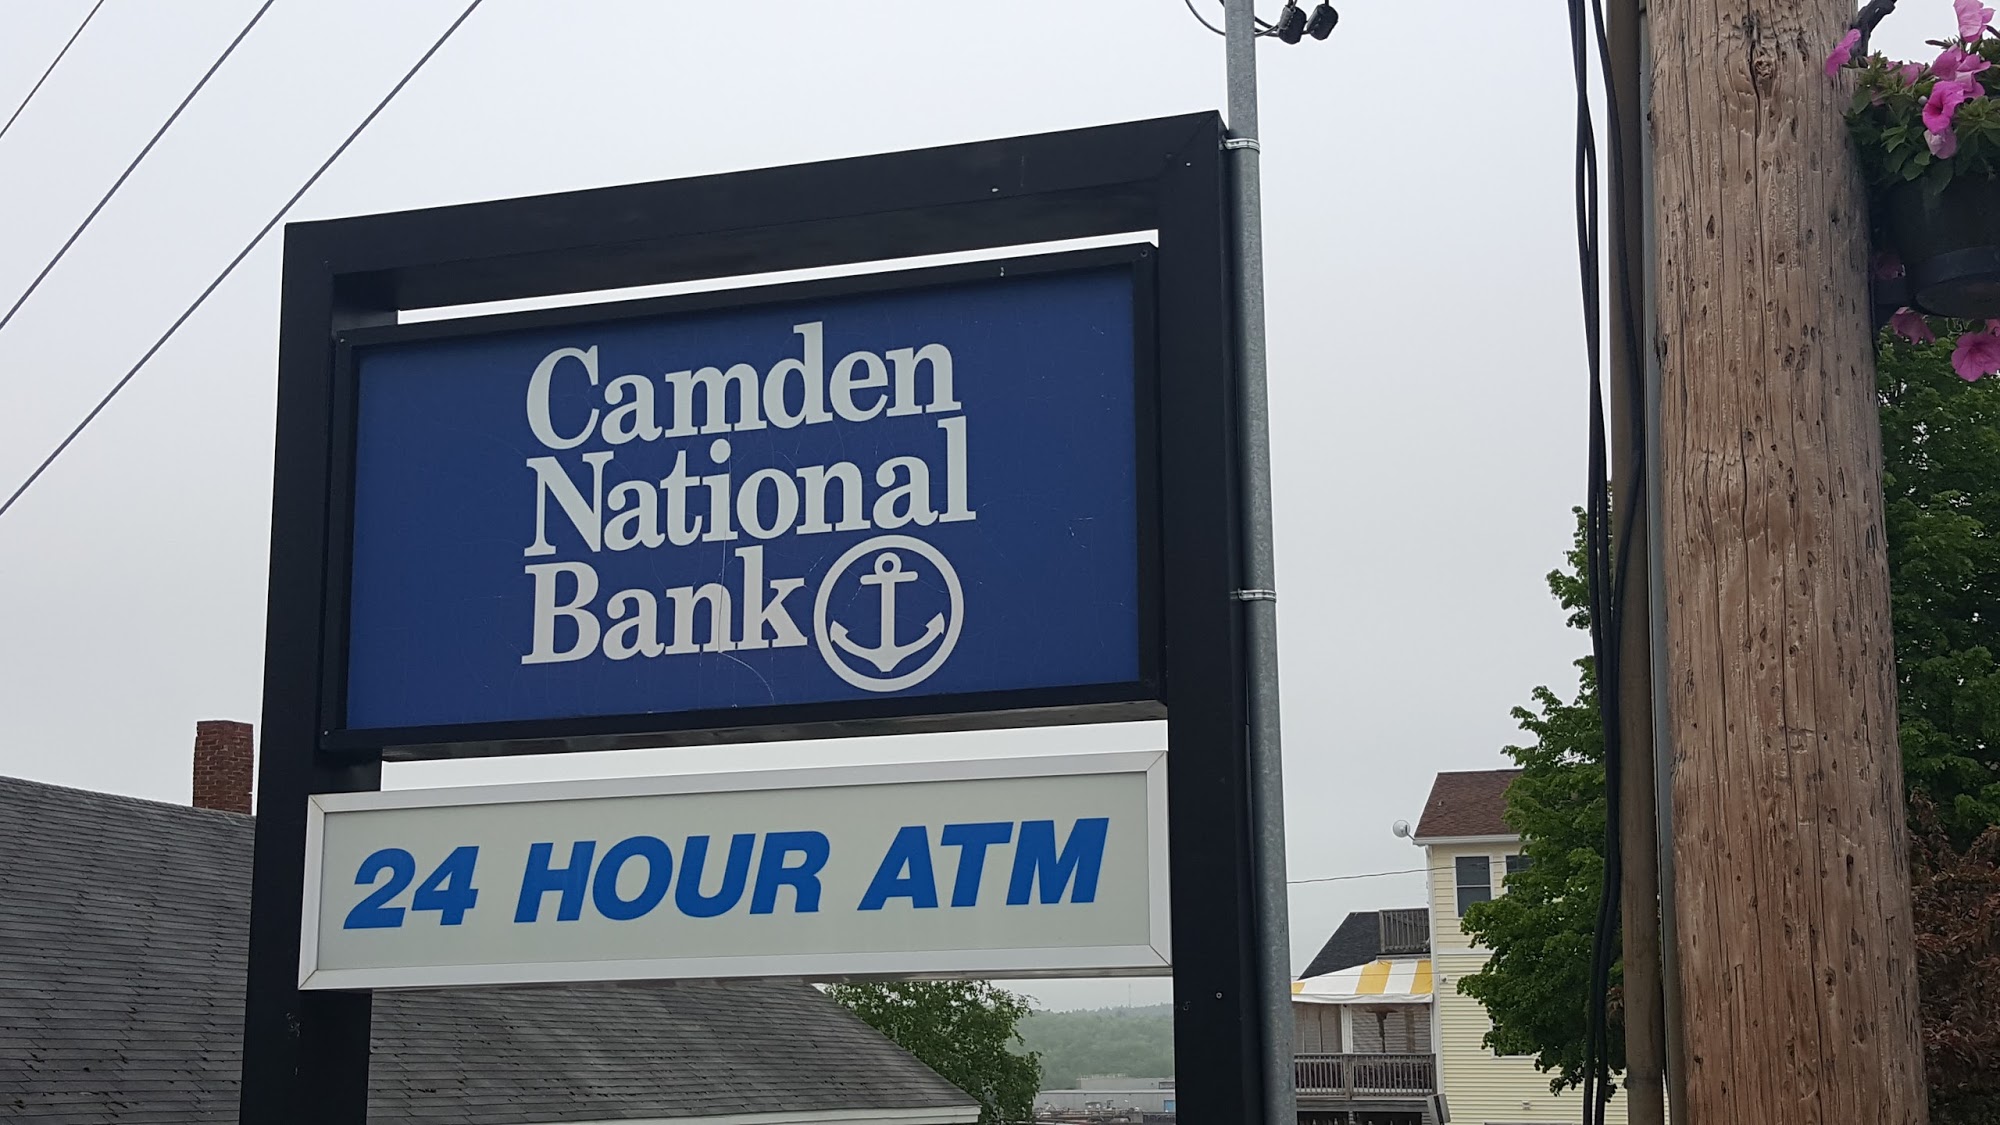 Camden National Bank